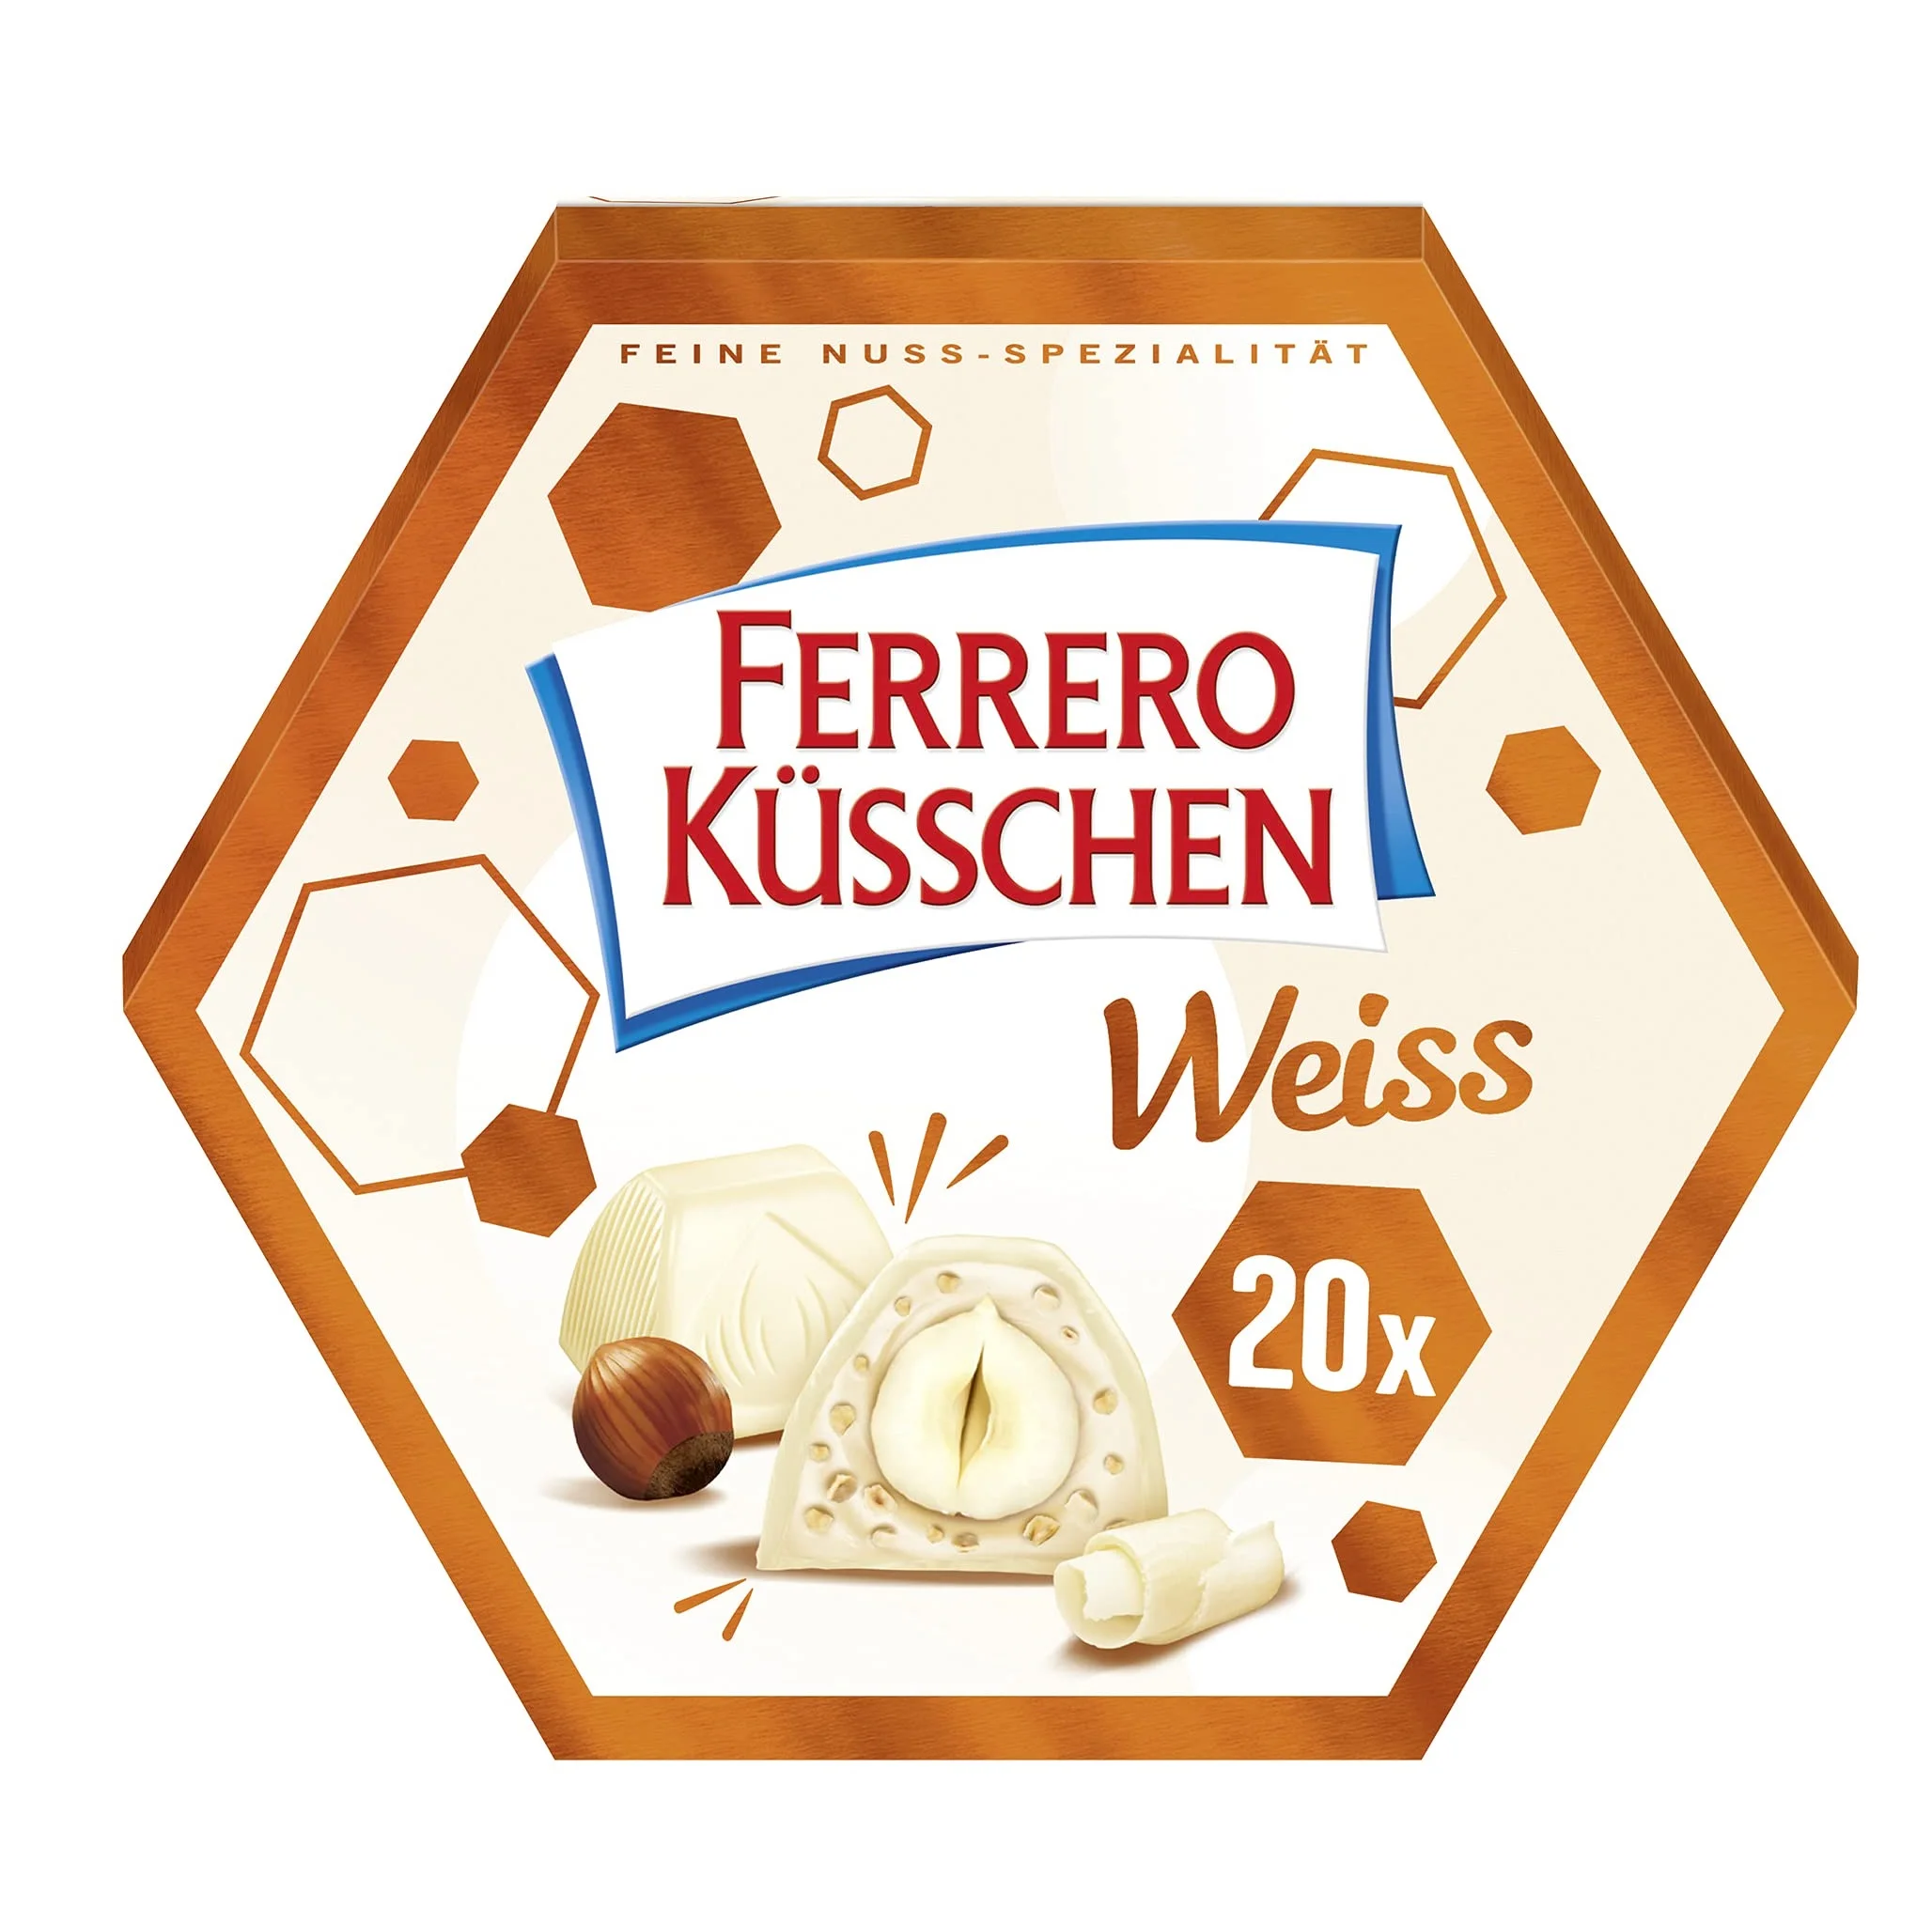 high quality ferrero kusschen / ferrero-kussen